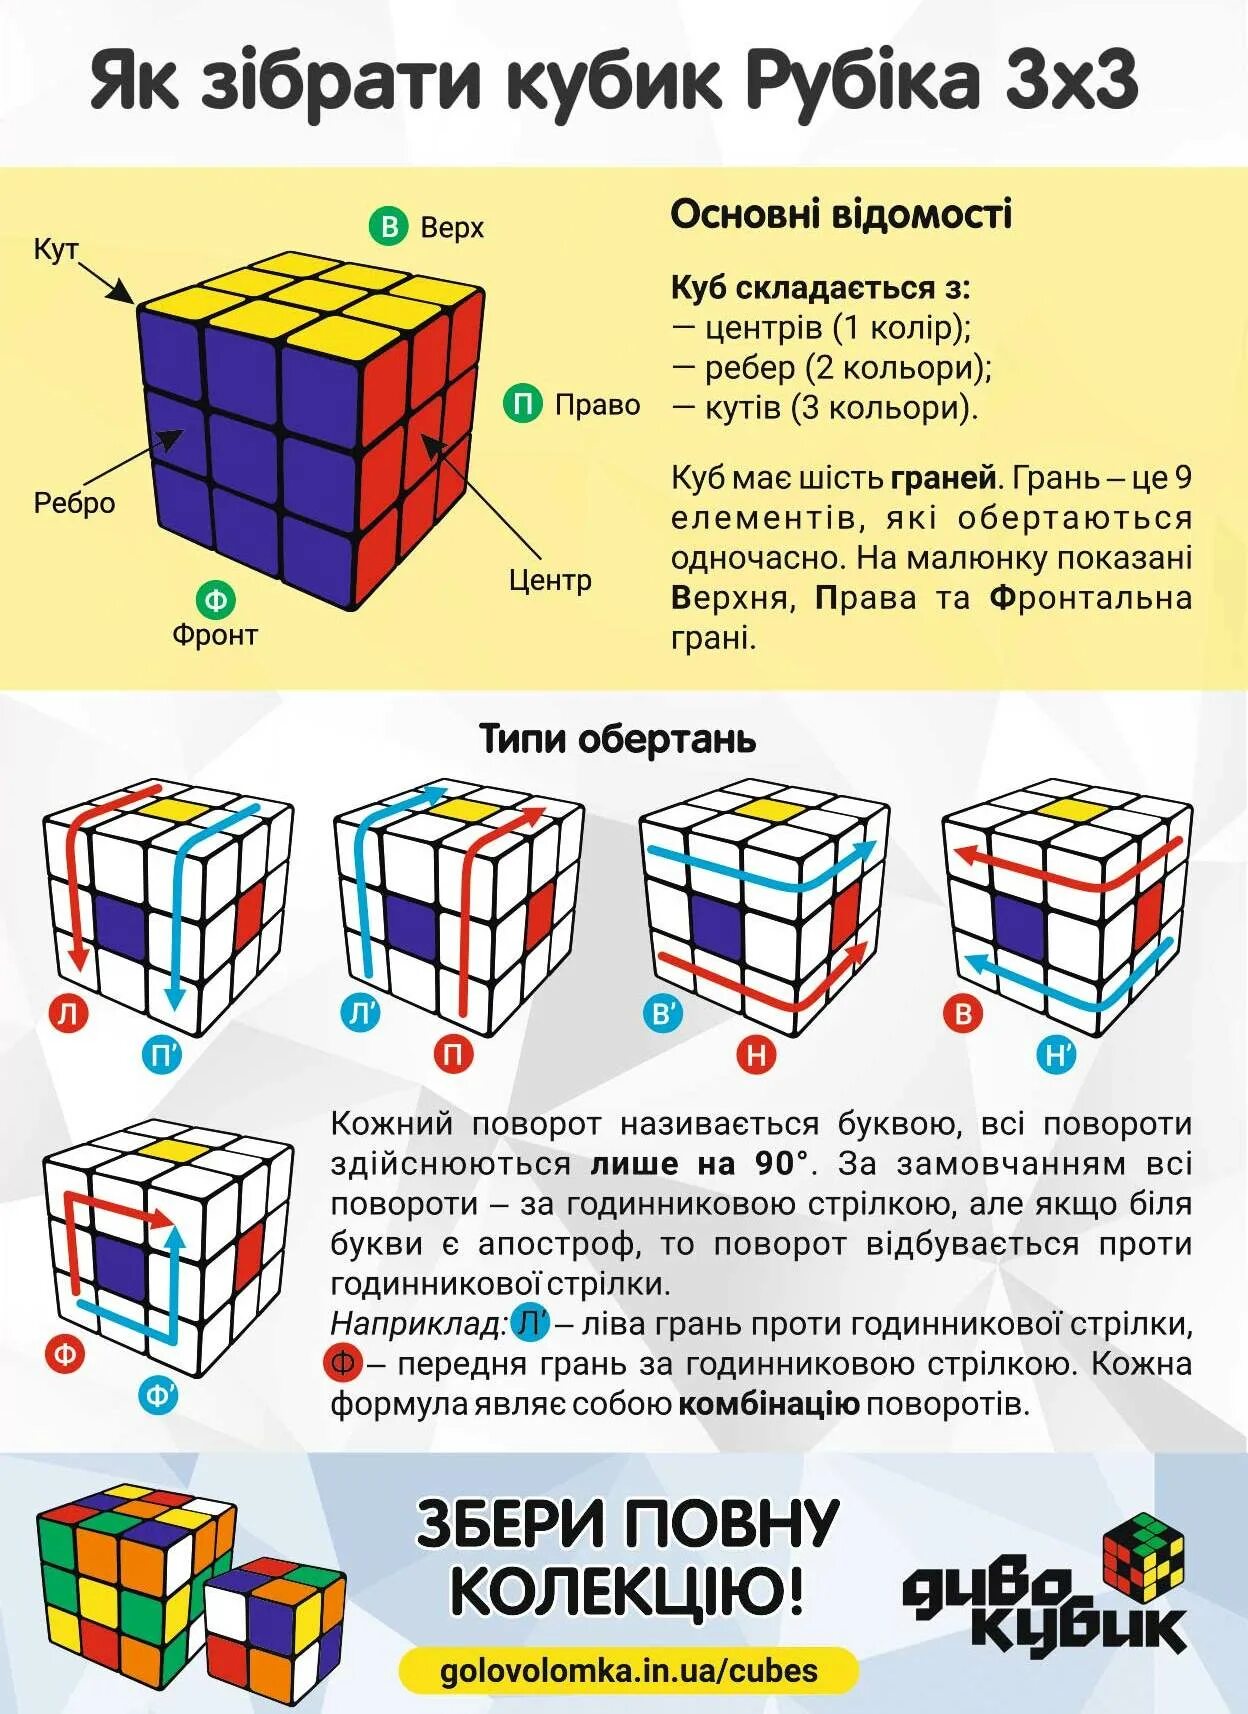 Инструкция кубика рубика 3х3. Алгоритмы по сборке кубика Рубика 3х3 для начинающих. Формулы кубика Рубика 3х3 для начинающих. Комбинации кубика Рубика 3х3. Кубик-Рубика 3х3 сборка пошагово.